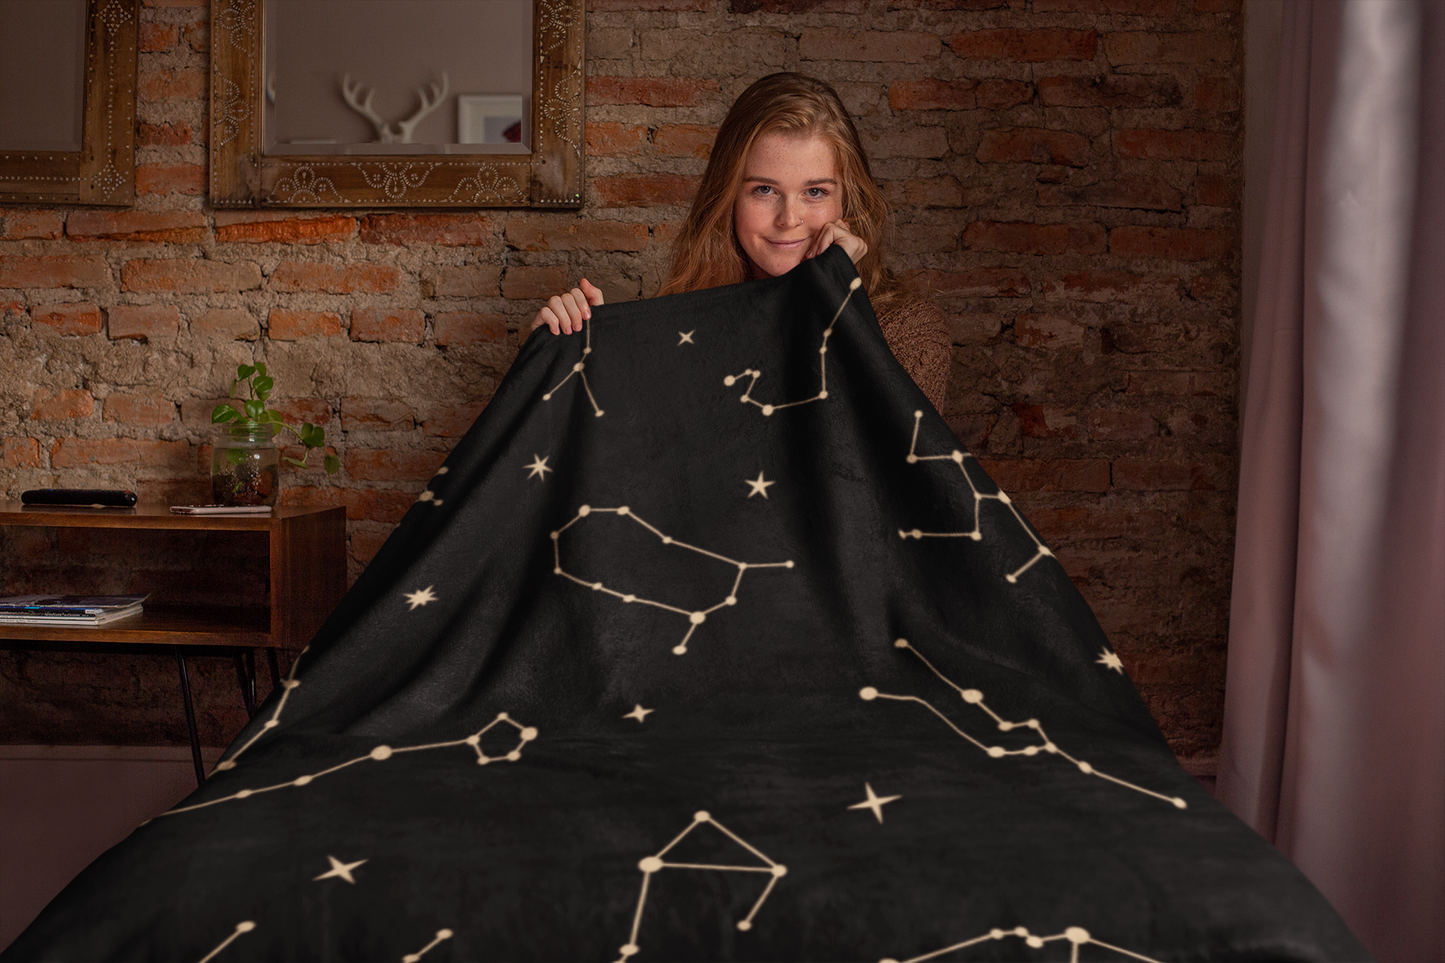 Constellation Black Plush Blanket